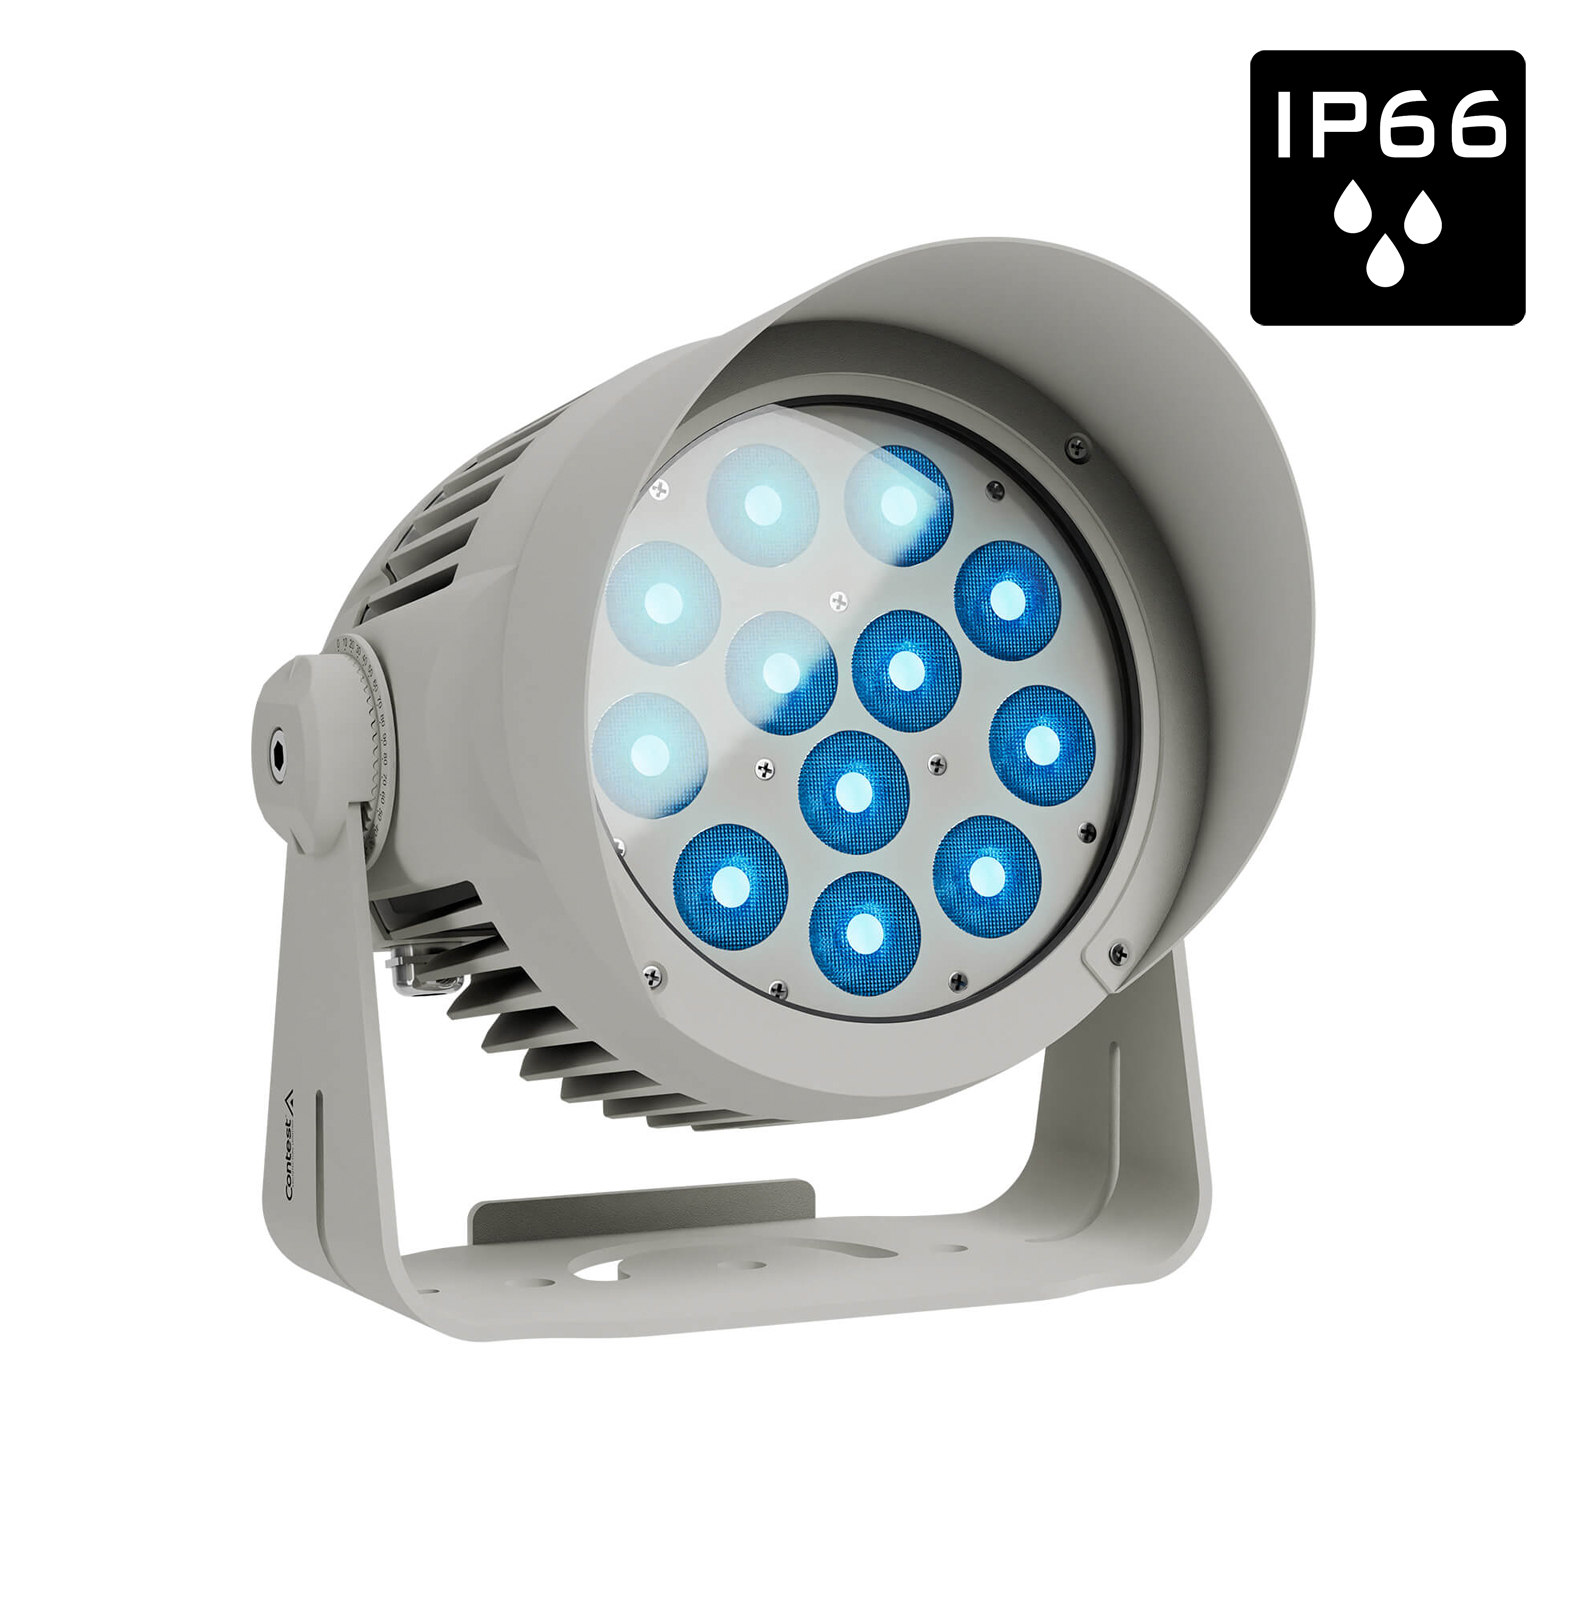 Architectural spotlight IP66 12xLEDs RGBL 120W 25-